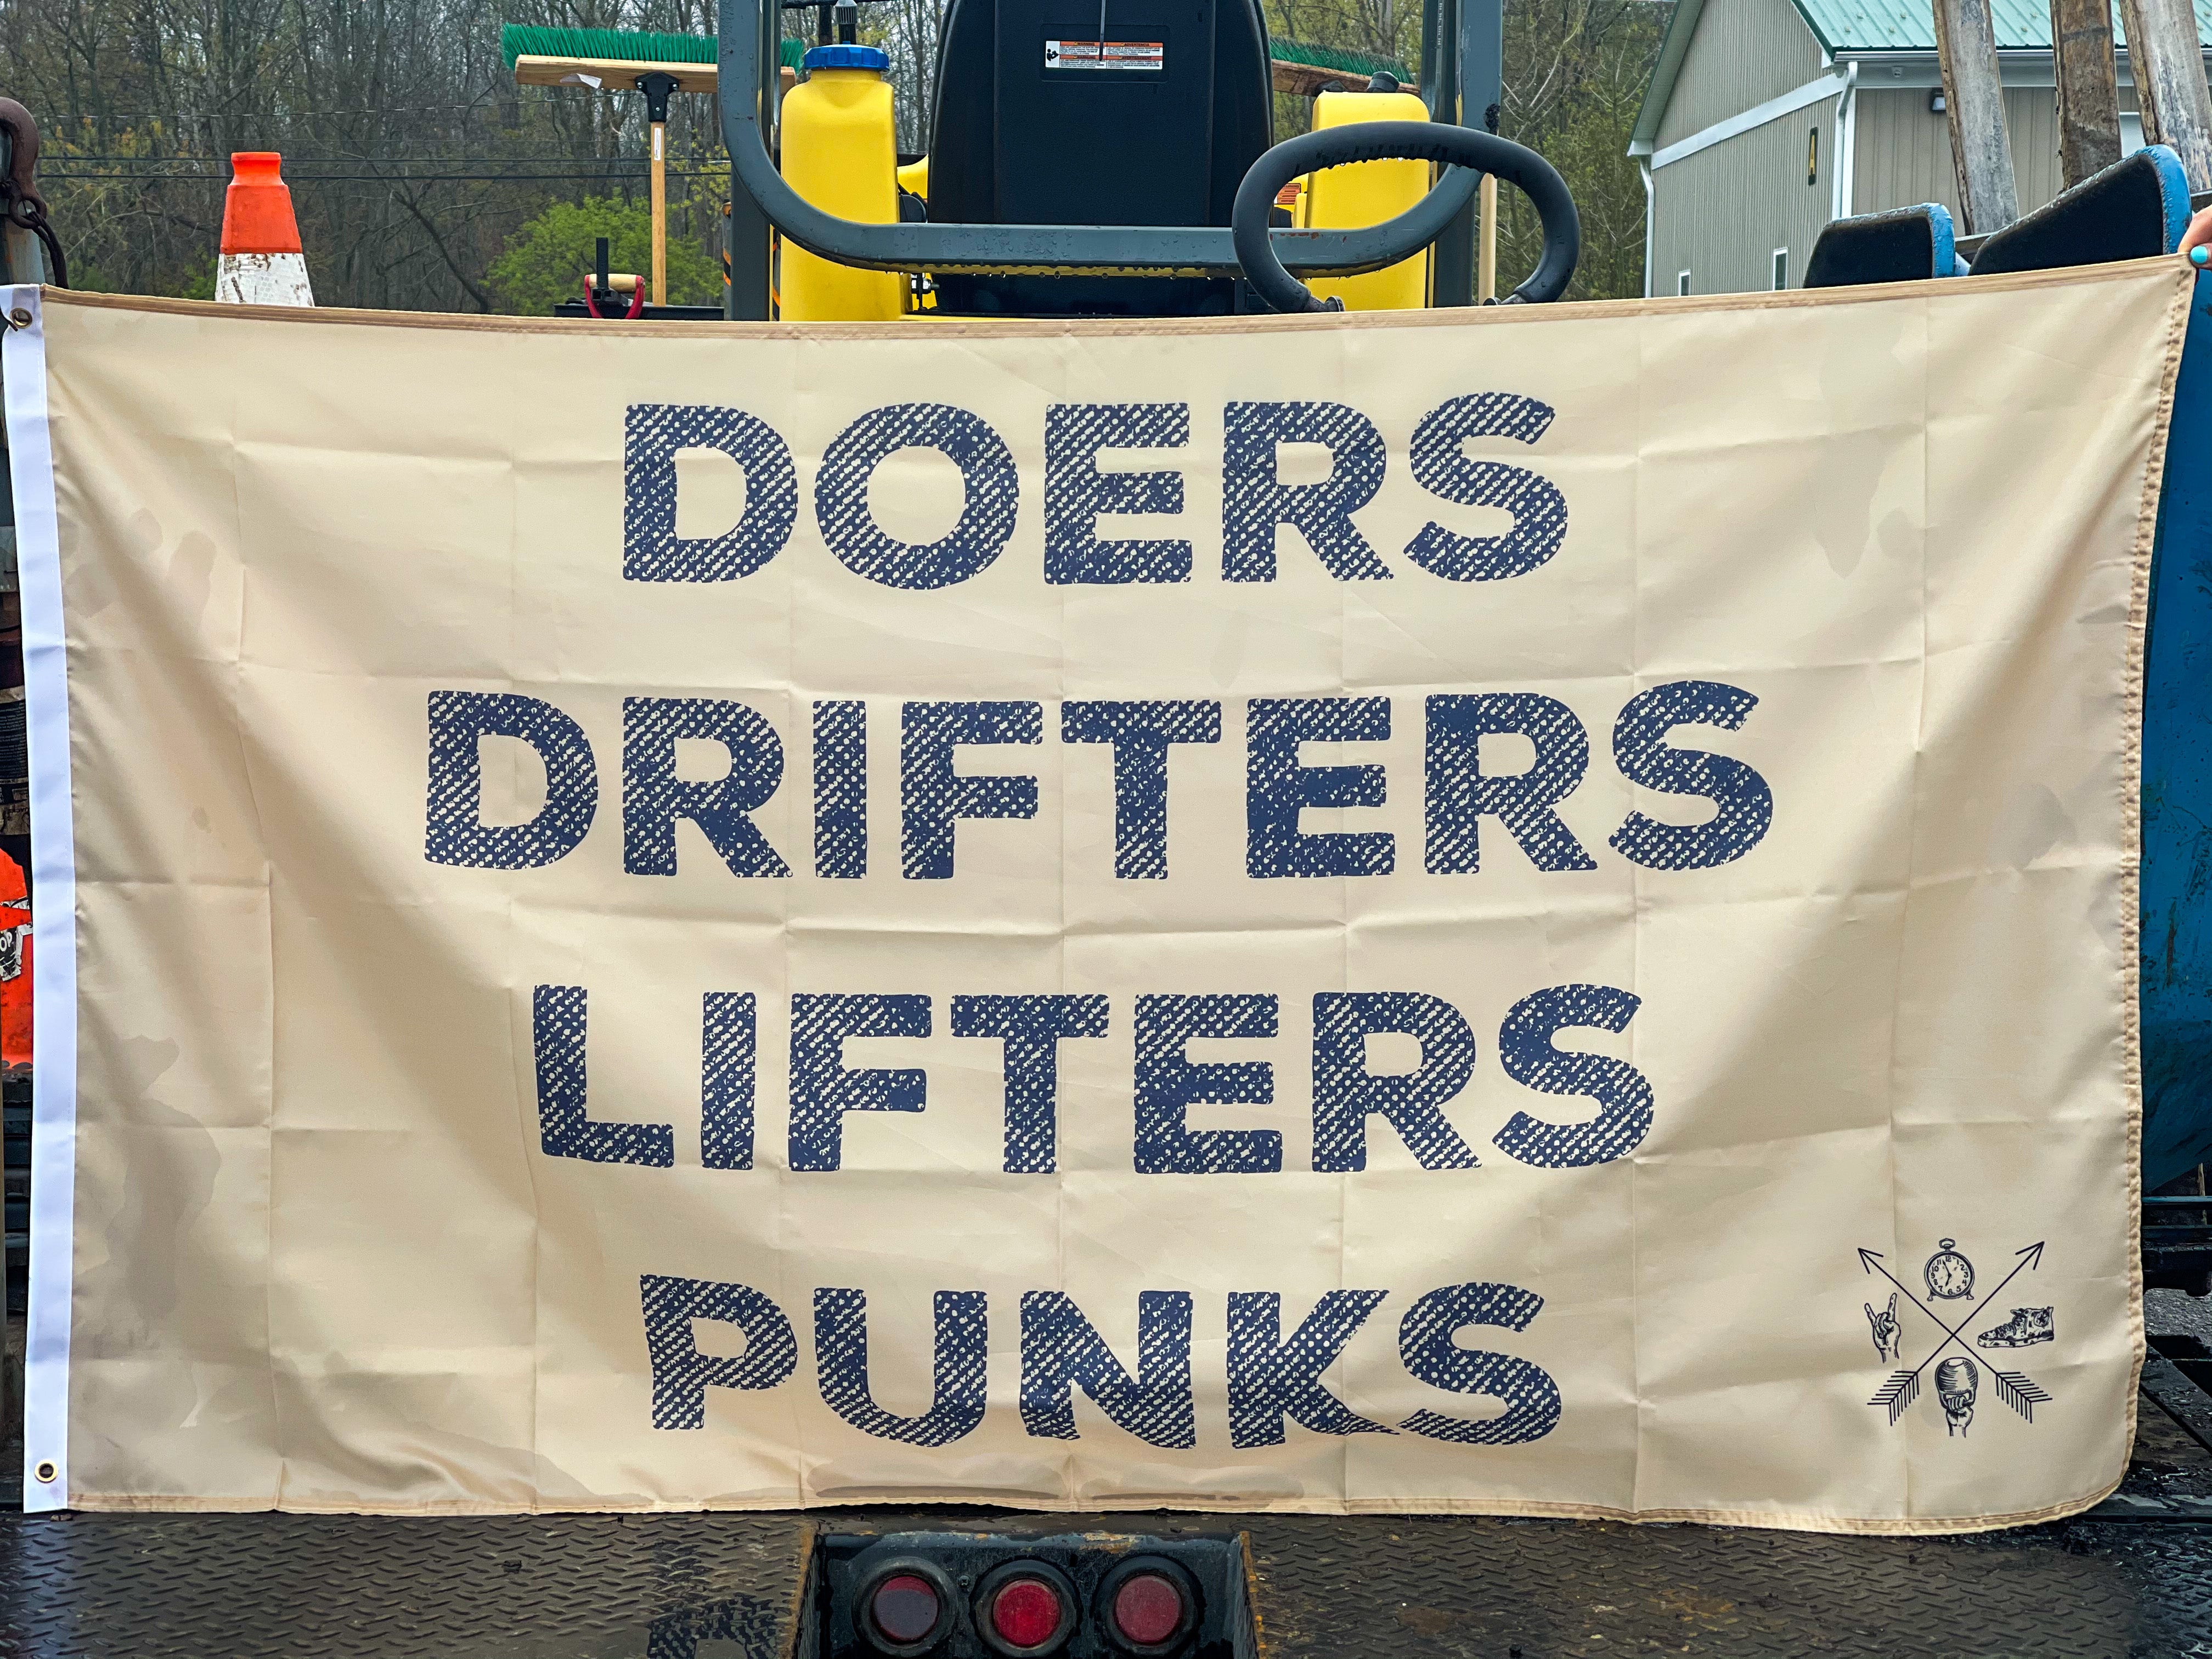 Doers Drifters Lifters Punks - Flag